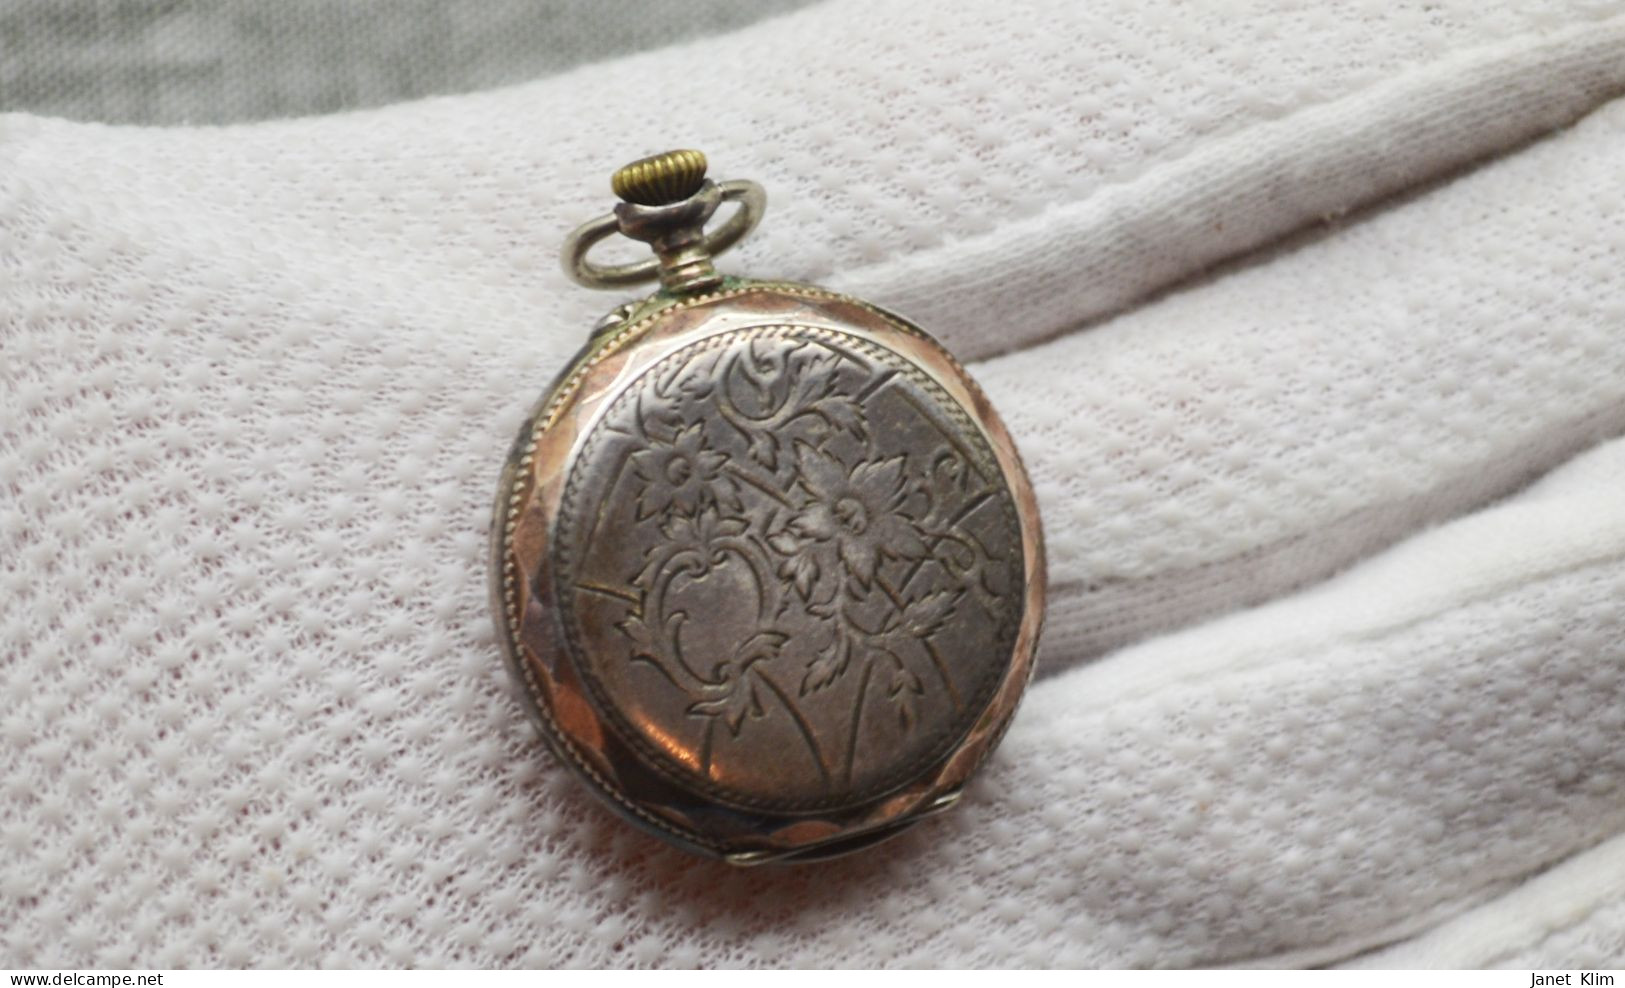 Vintage silver pocket watch- works